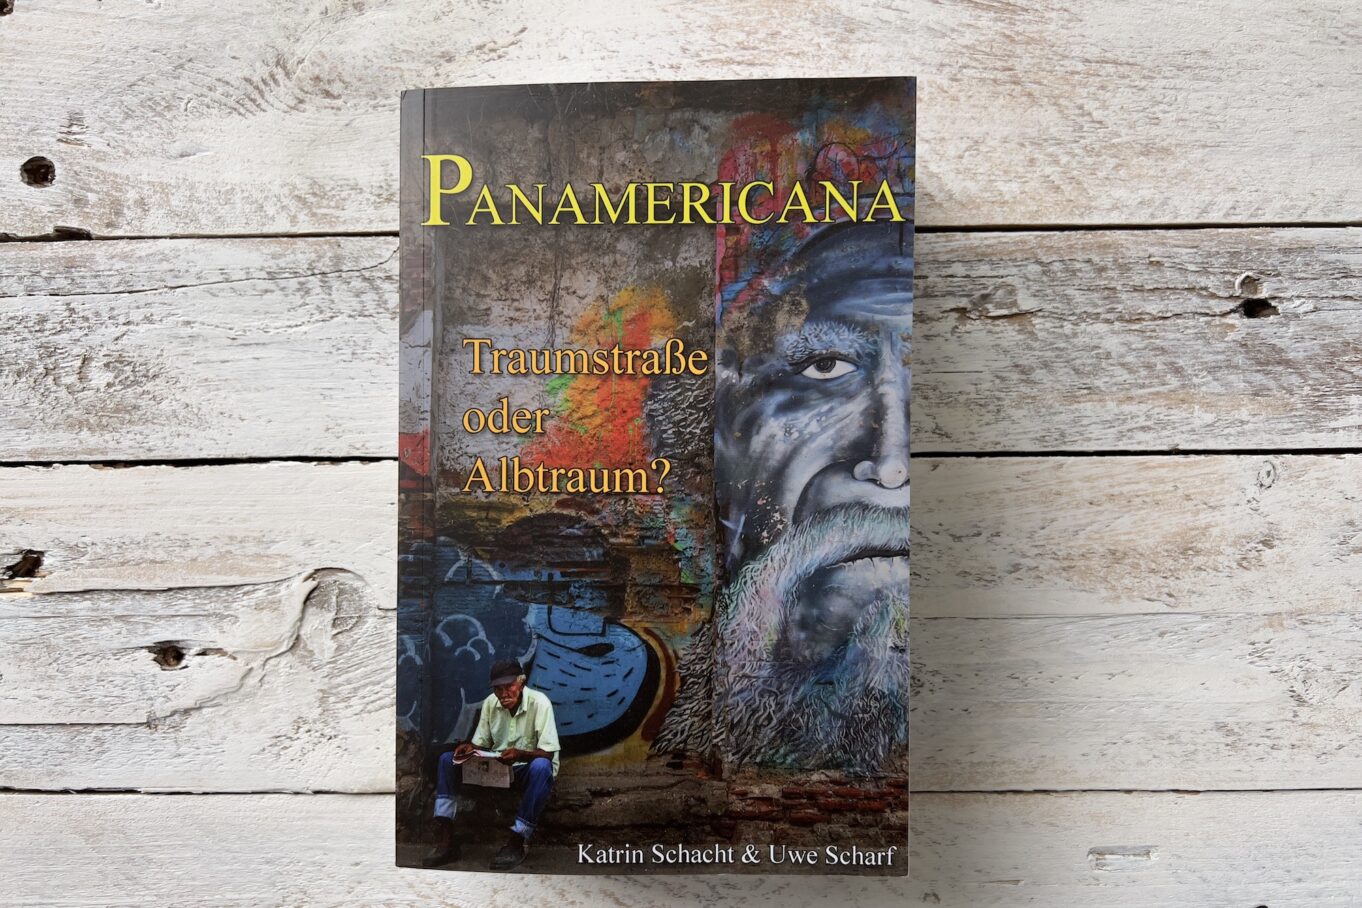 Buchkritik Panamericana Traumstraße oder Albtraum